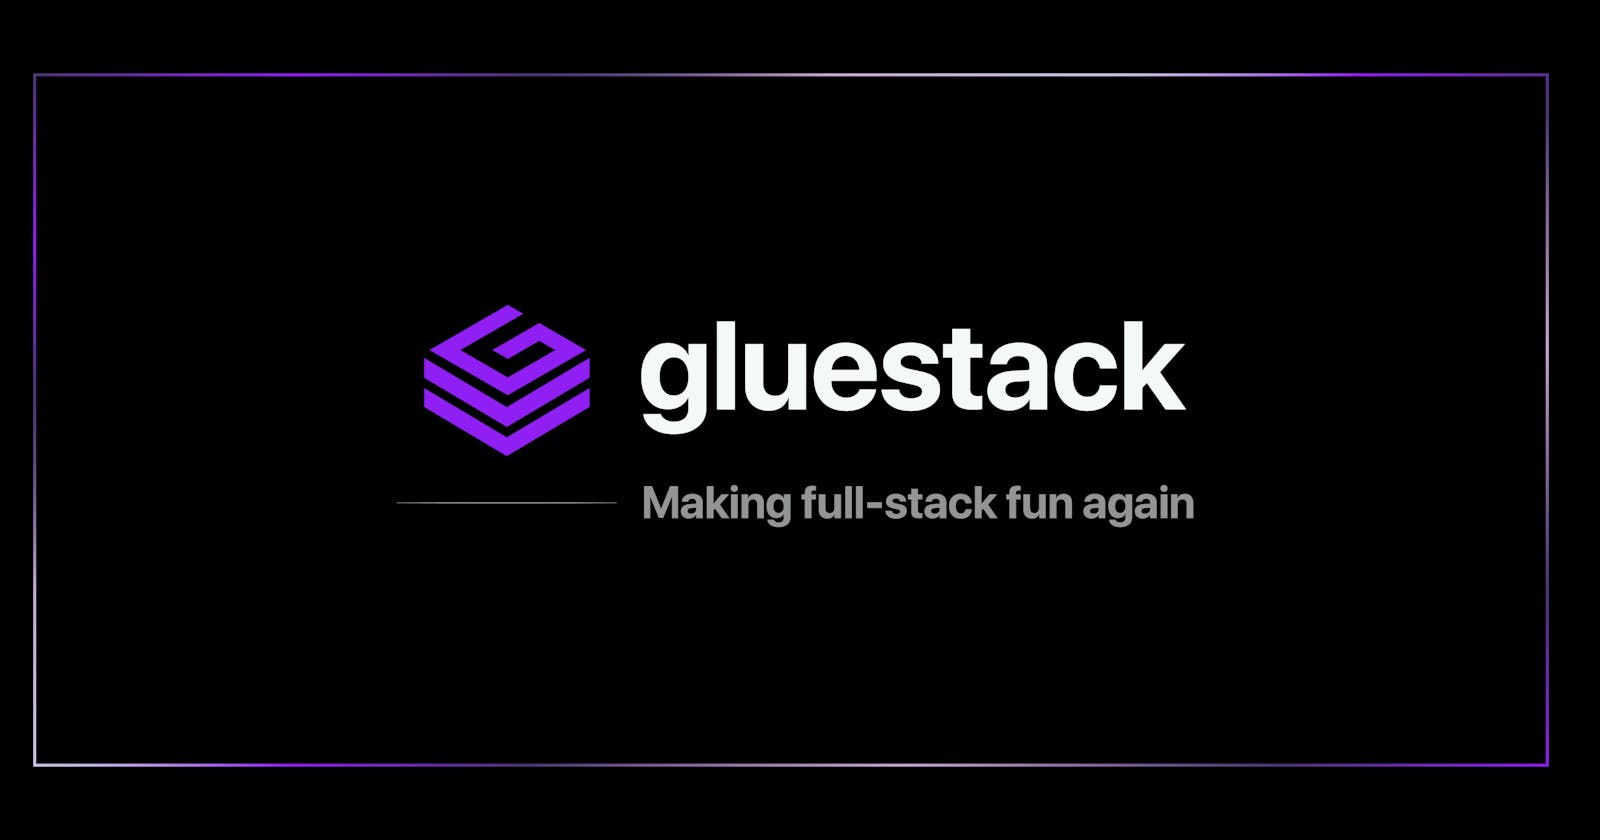 gluestack — Making Fullstack Fun Again